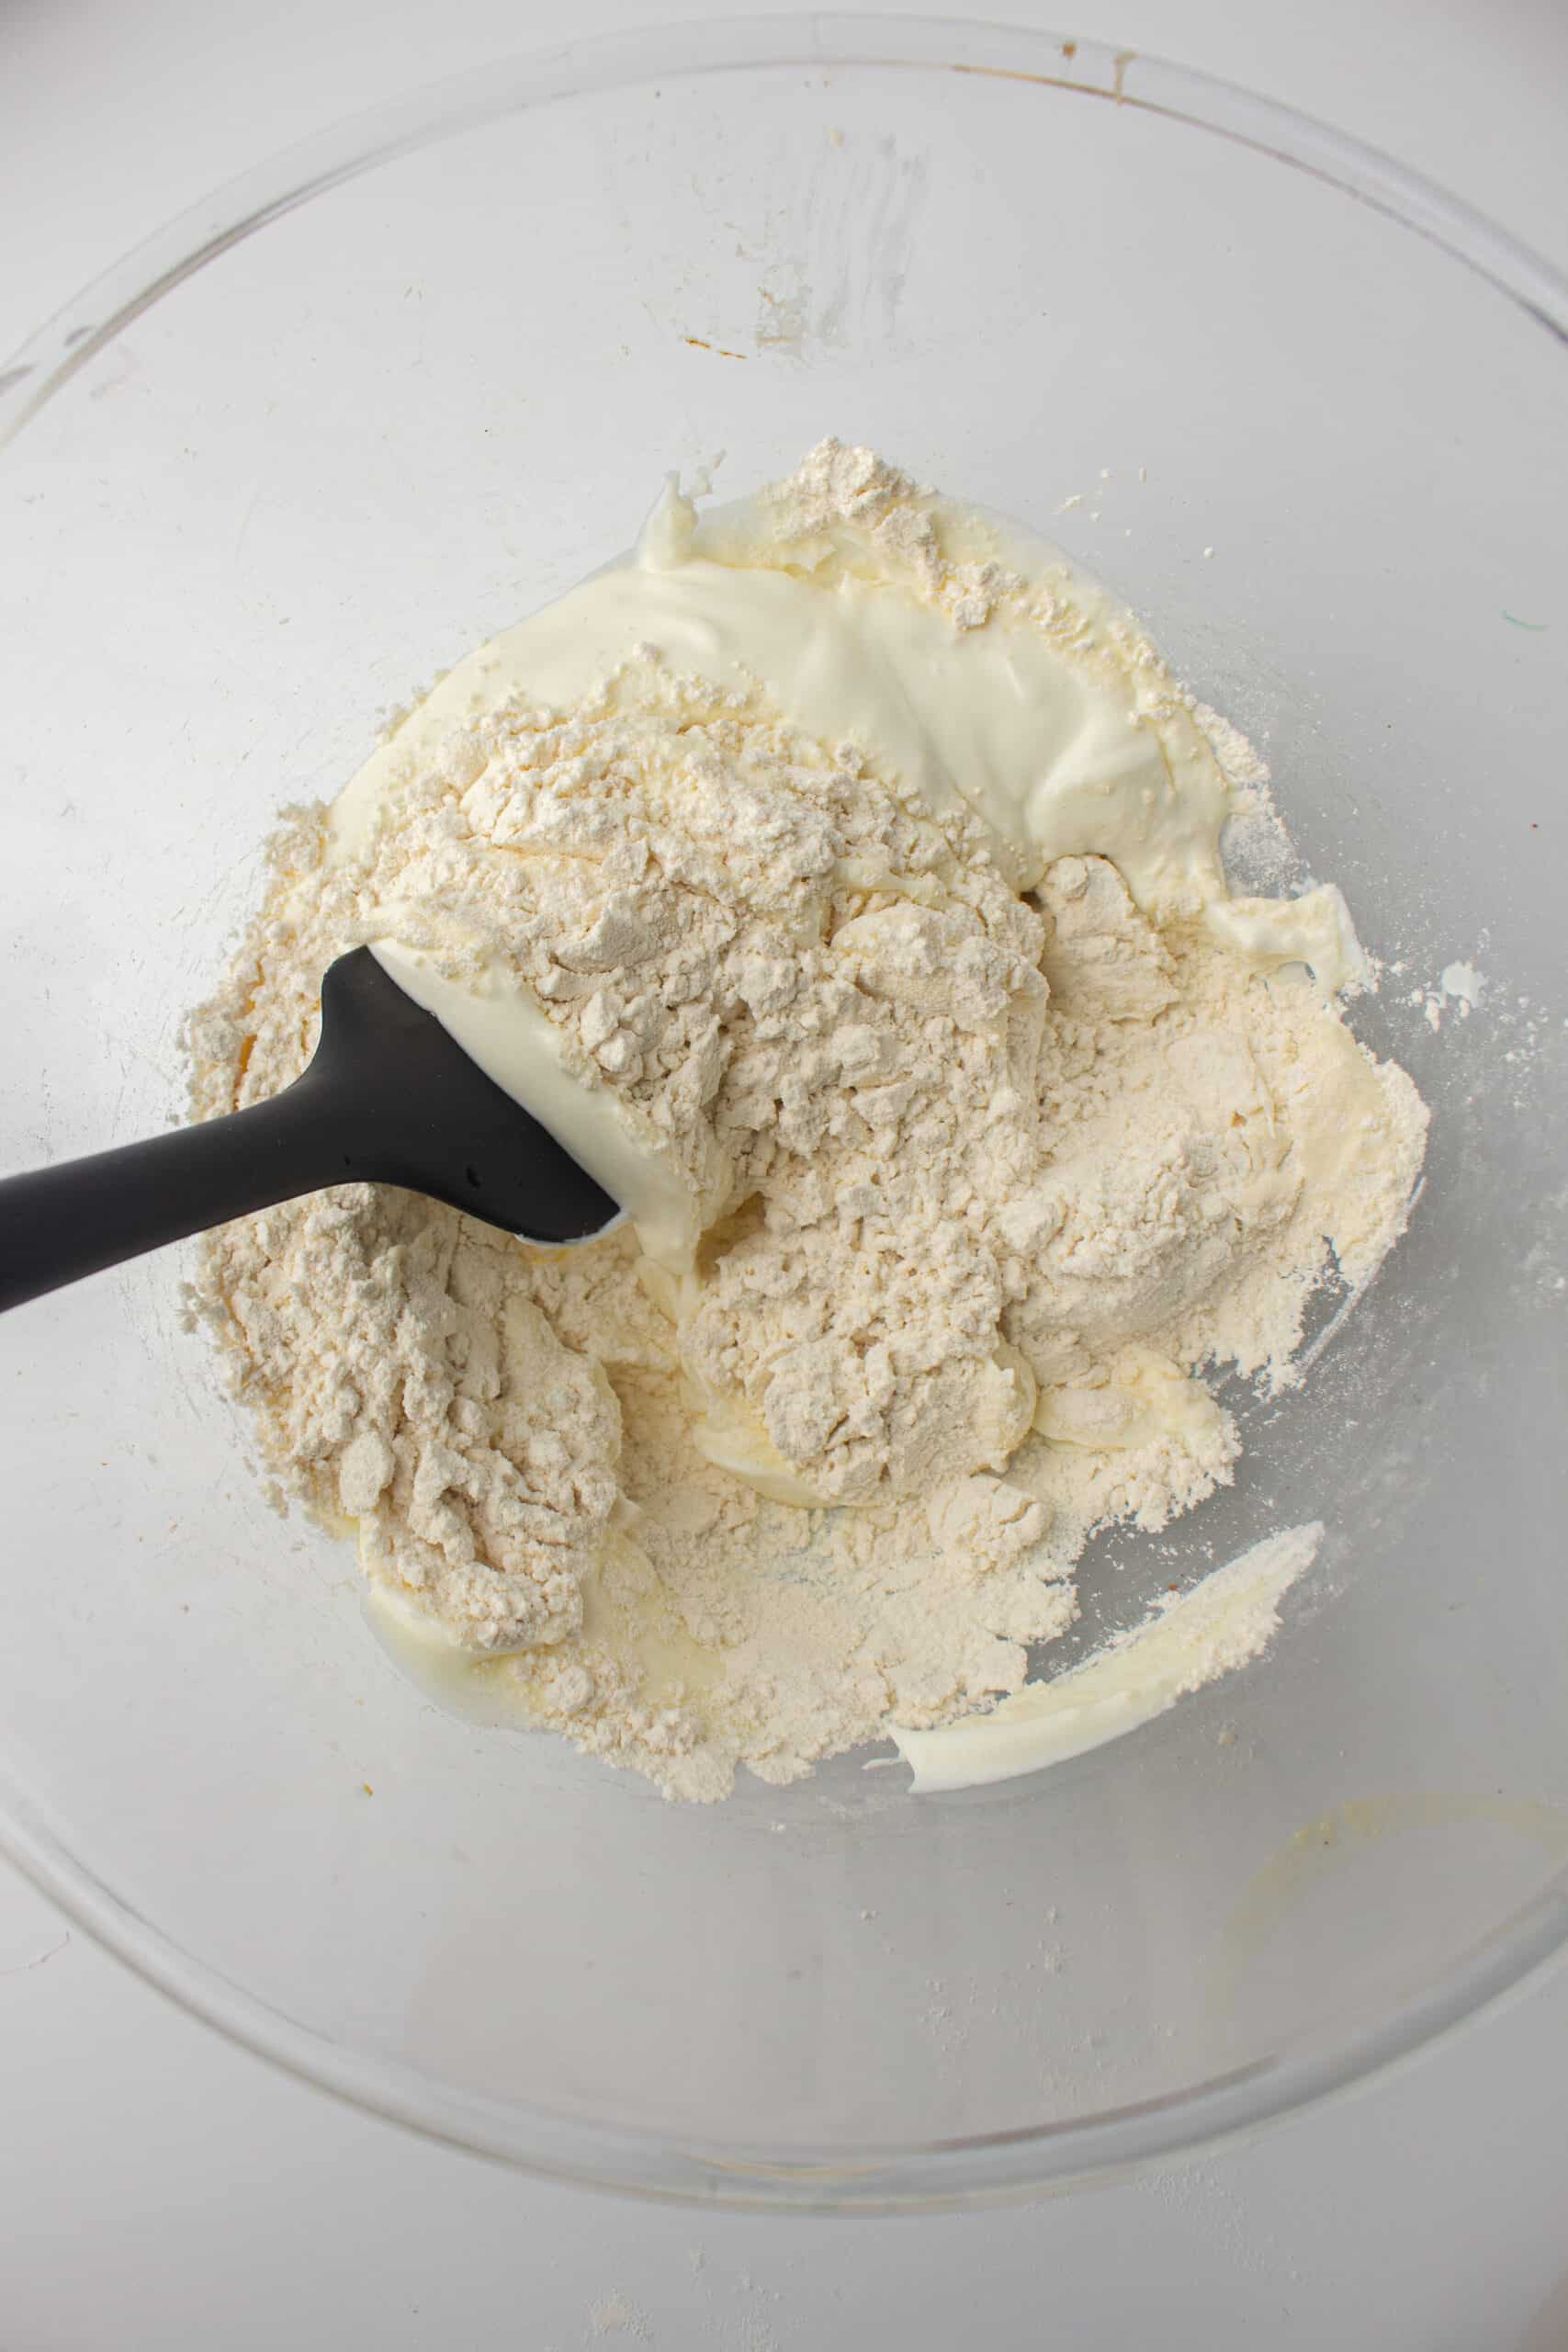 Mix yogurt and flour